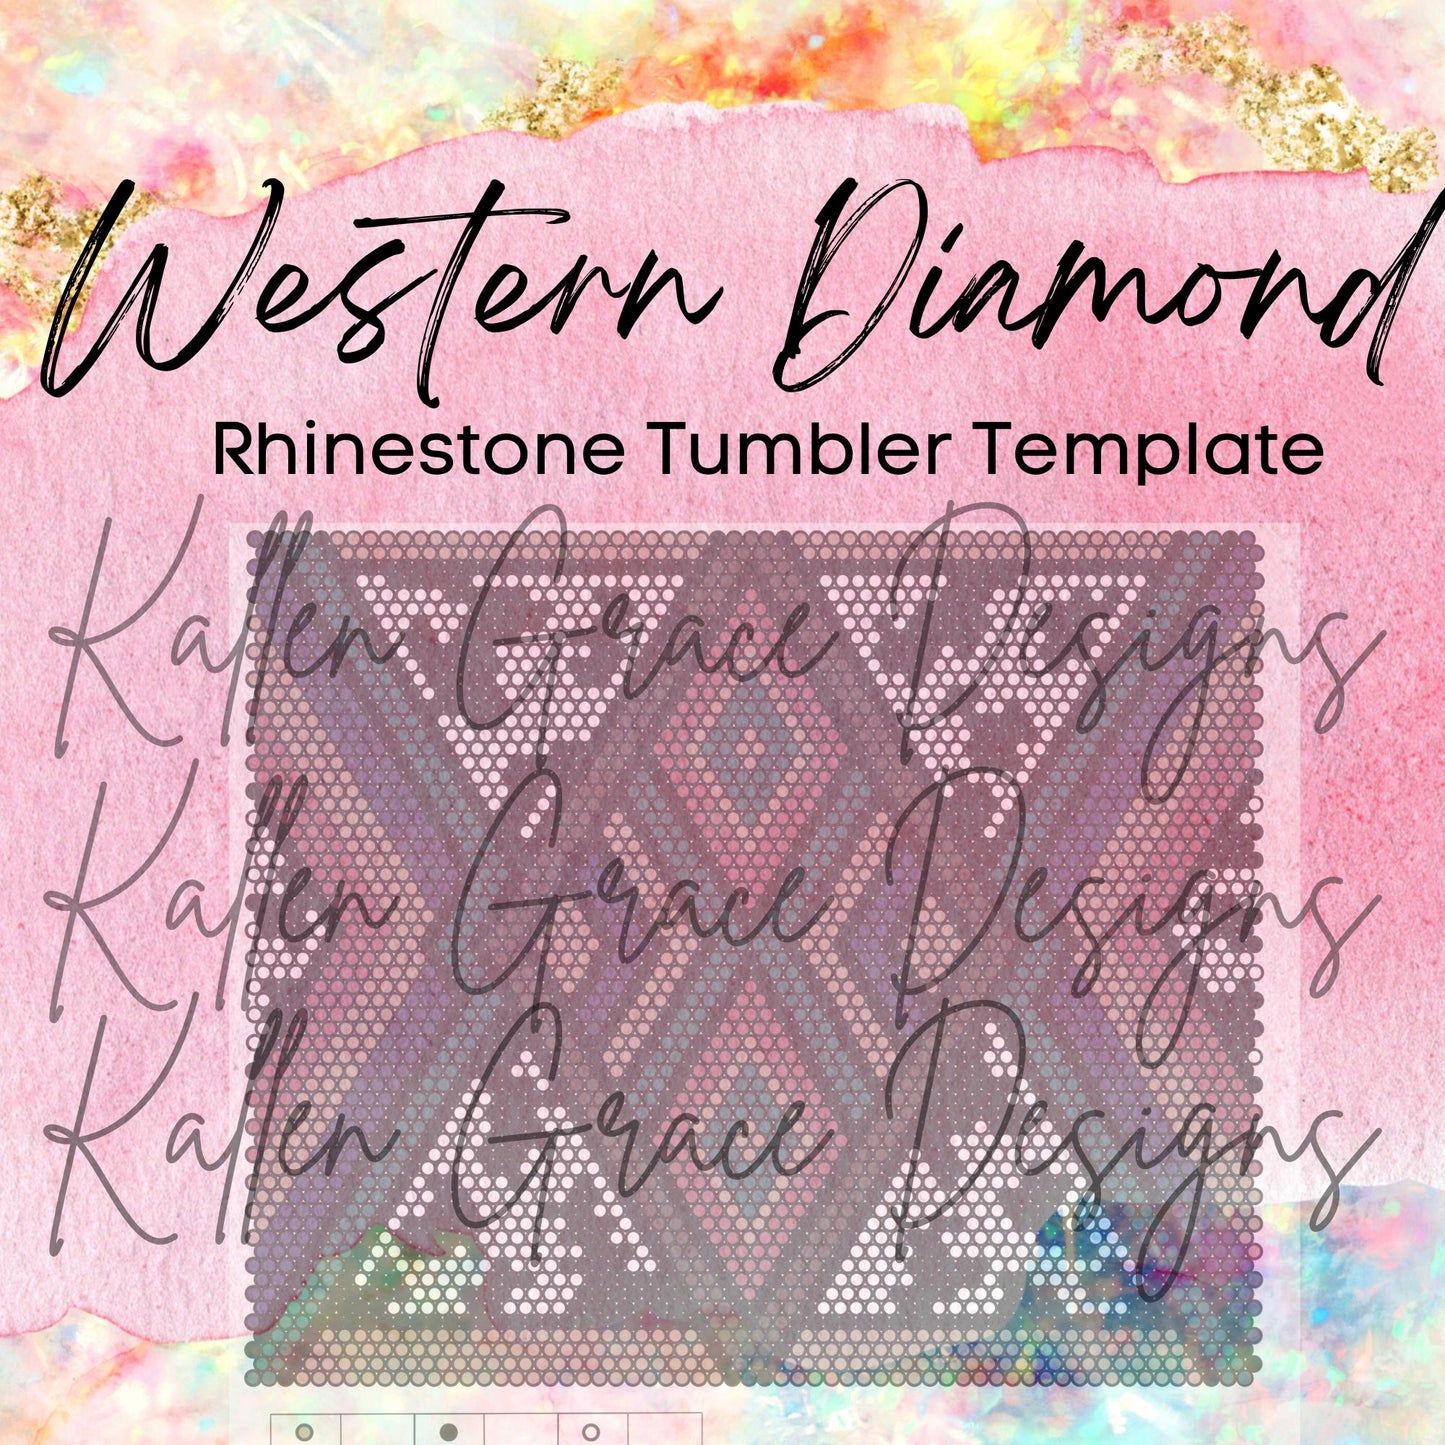 Rhinestone Western Diamond Template